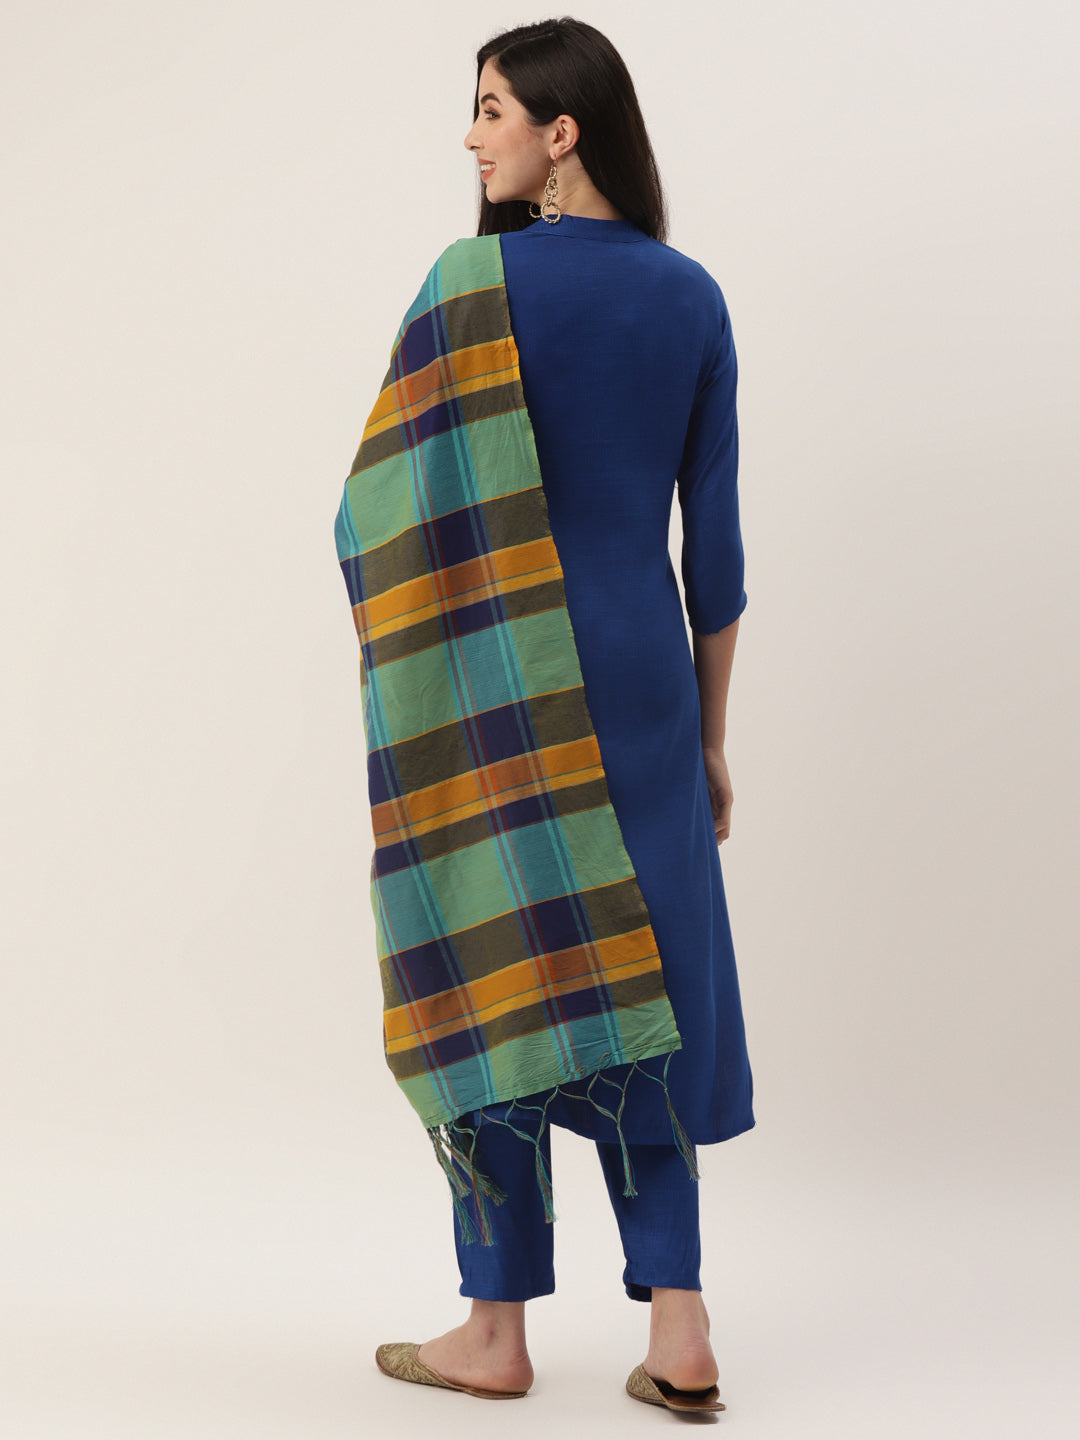 Women's Blue Rayon Blend Embroidered Straight Kurta Trouser Set With Dupatta - VAABA